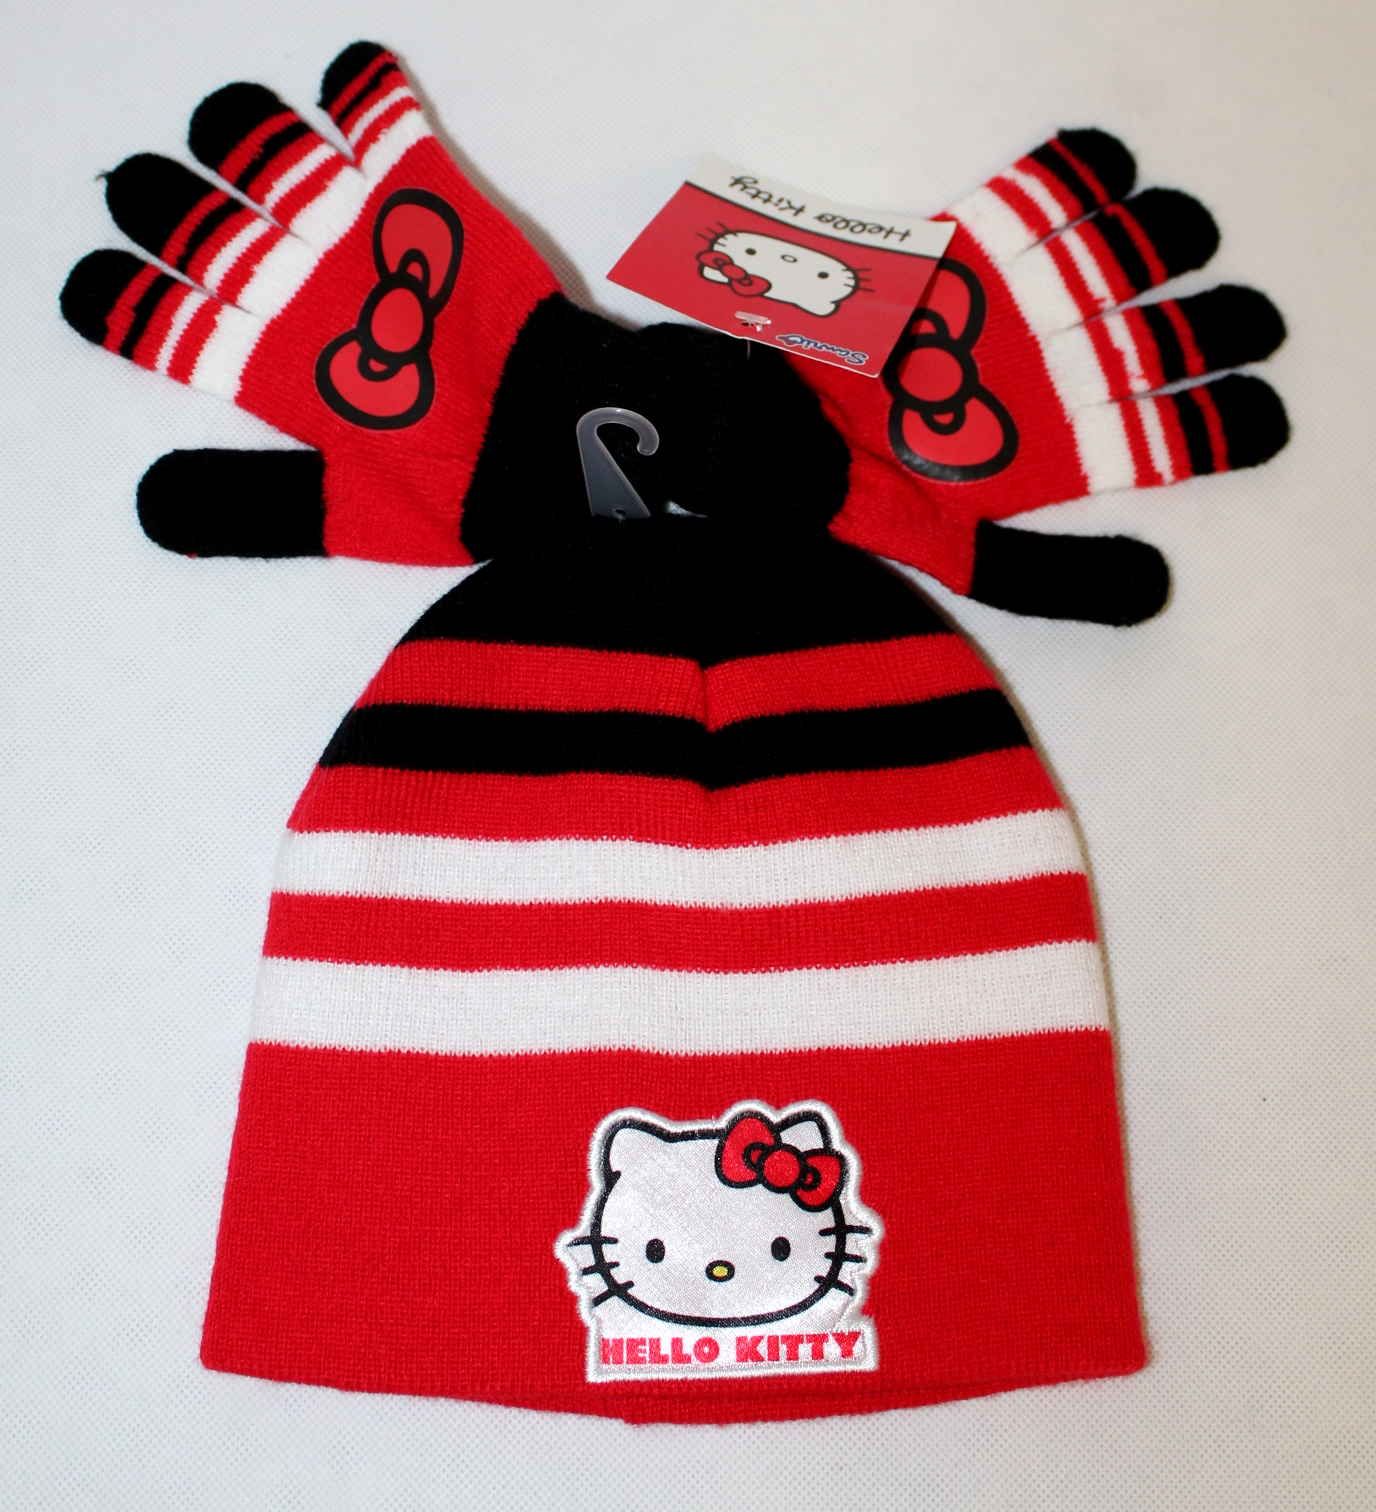 Dětský set Hello Kitty čepice a rukavice, dívčí čepice Hello Kitty, rukavice Hello Kitty, červená čepice Hello Kitty Sanrio